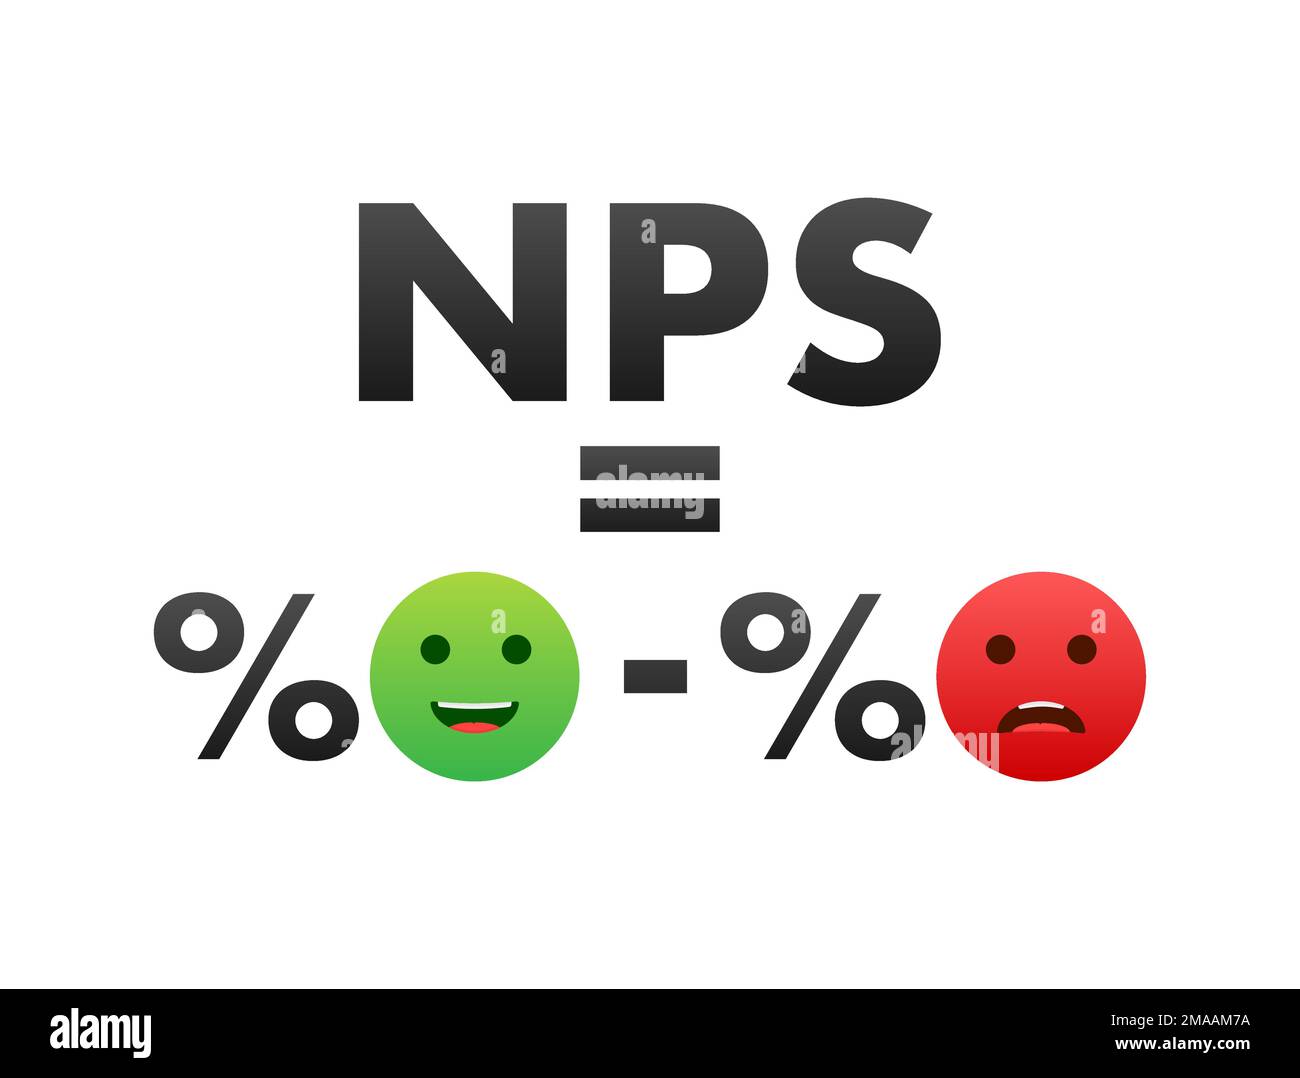 NPS - Net promoter score sign, label. Vector stock illustration. Stock Vector